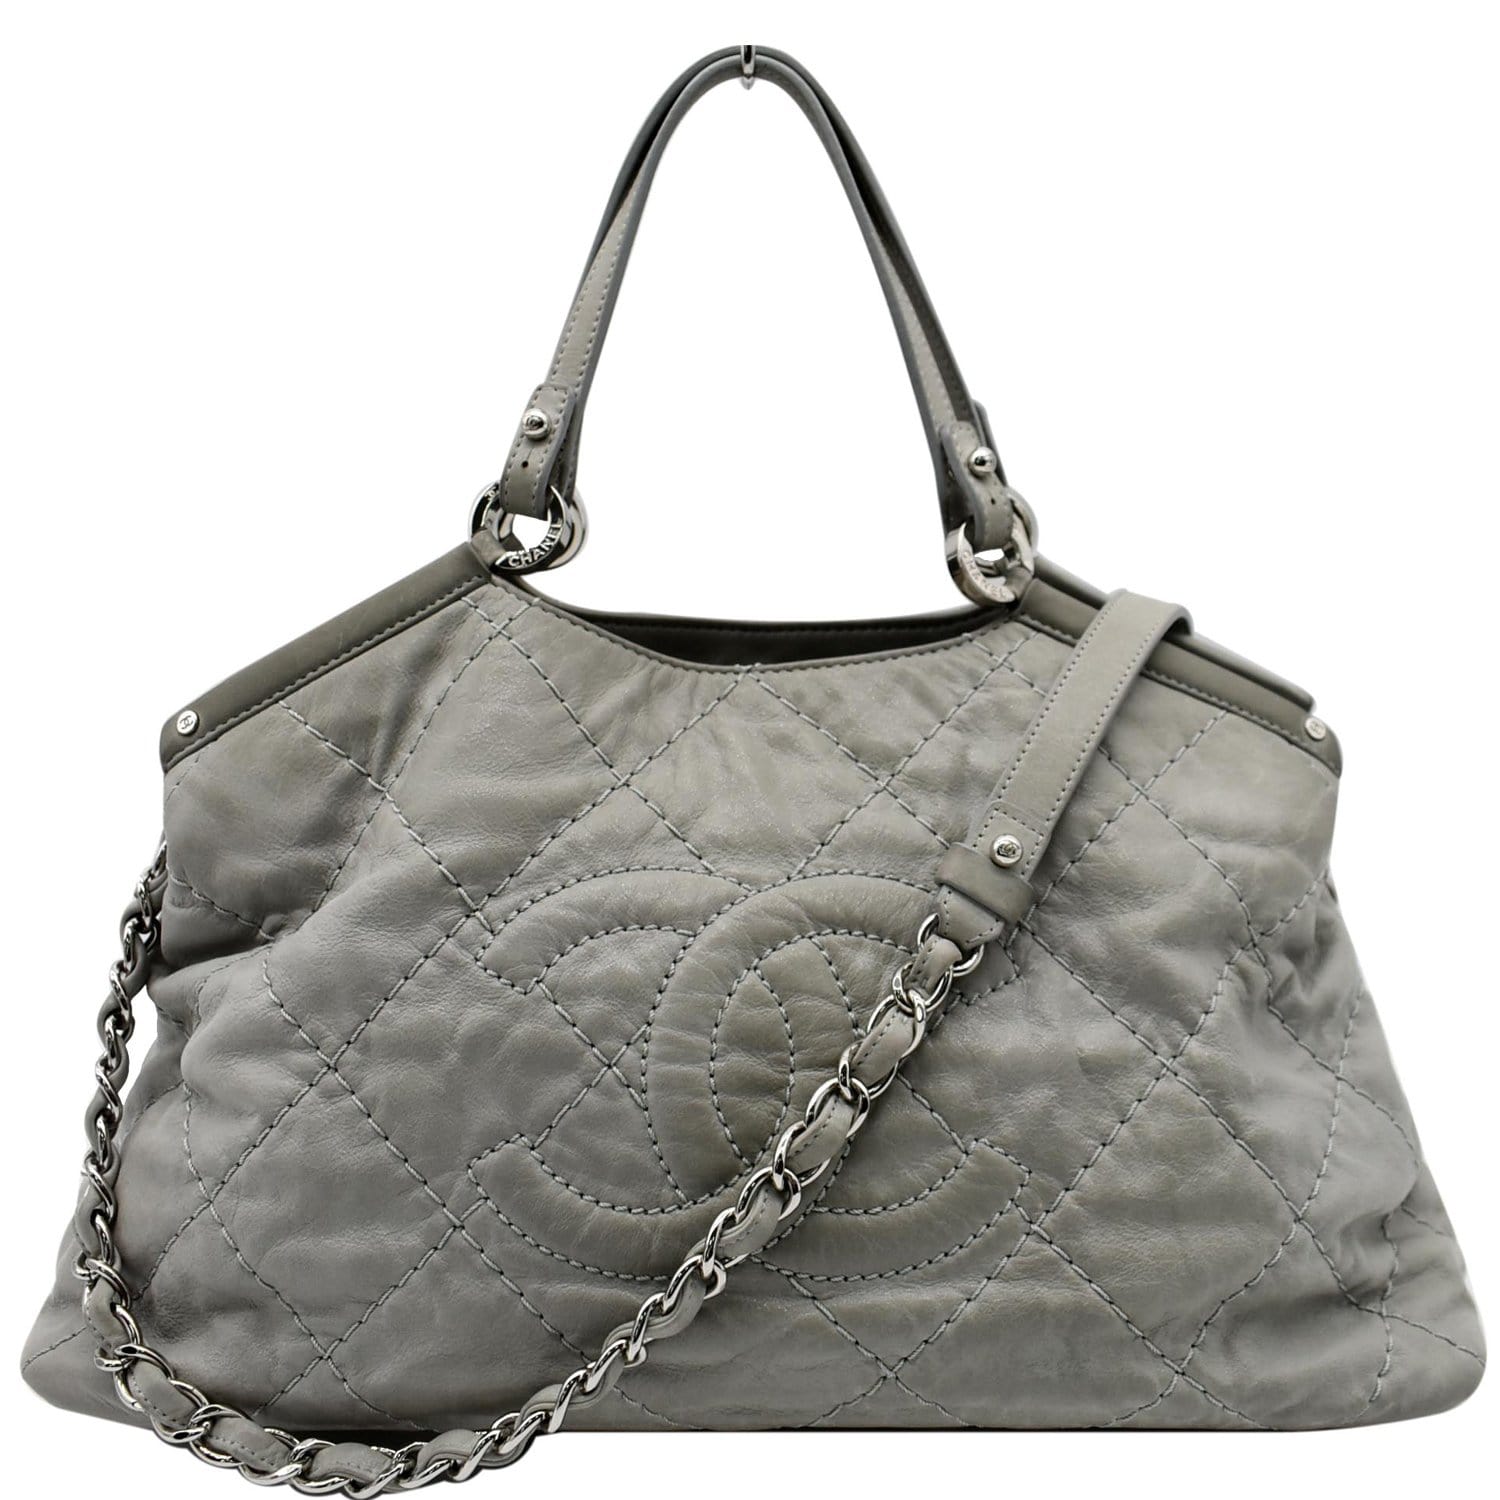 Gucci Wild Stitch CC Lambskin Leather Satchel Bag